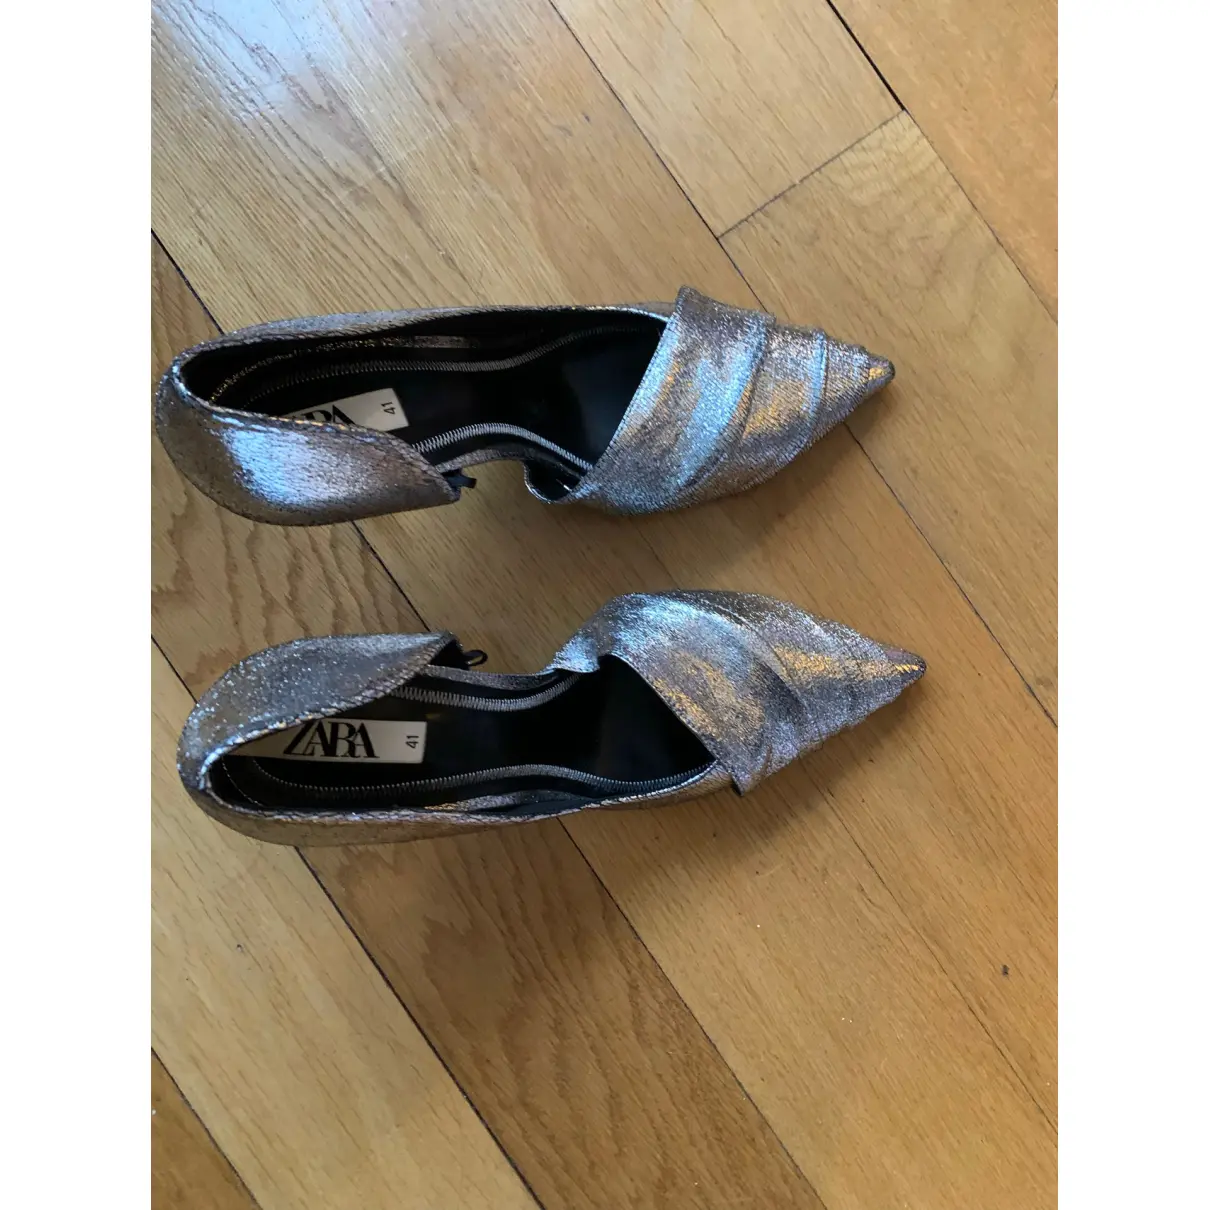 Buy Zara Glitter heels online